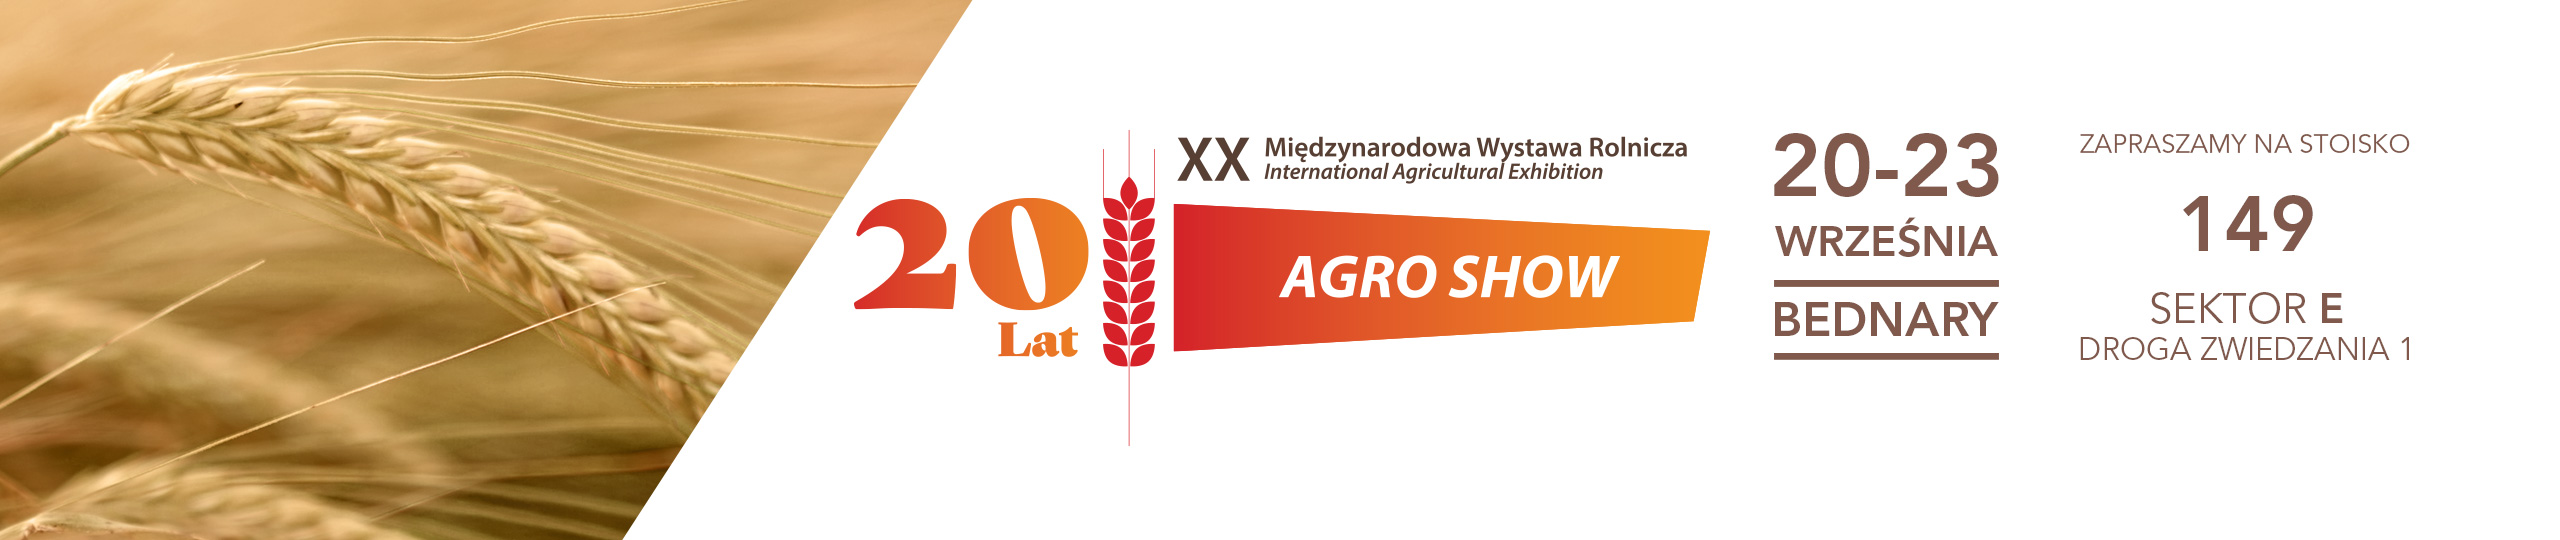 Targi rolnicze Agro Show 2018 w Bednarach - Precon Polska